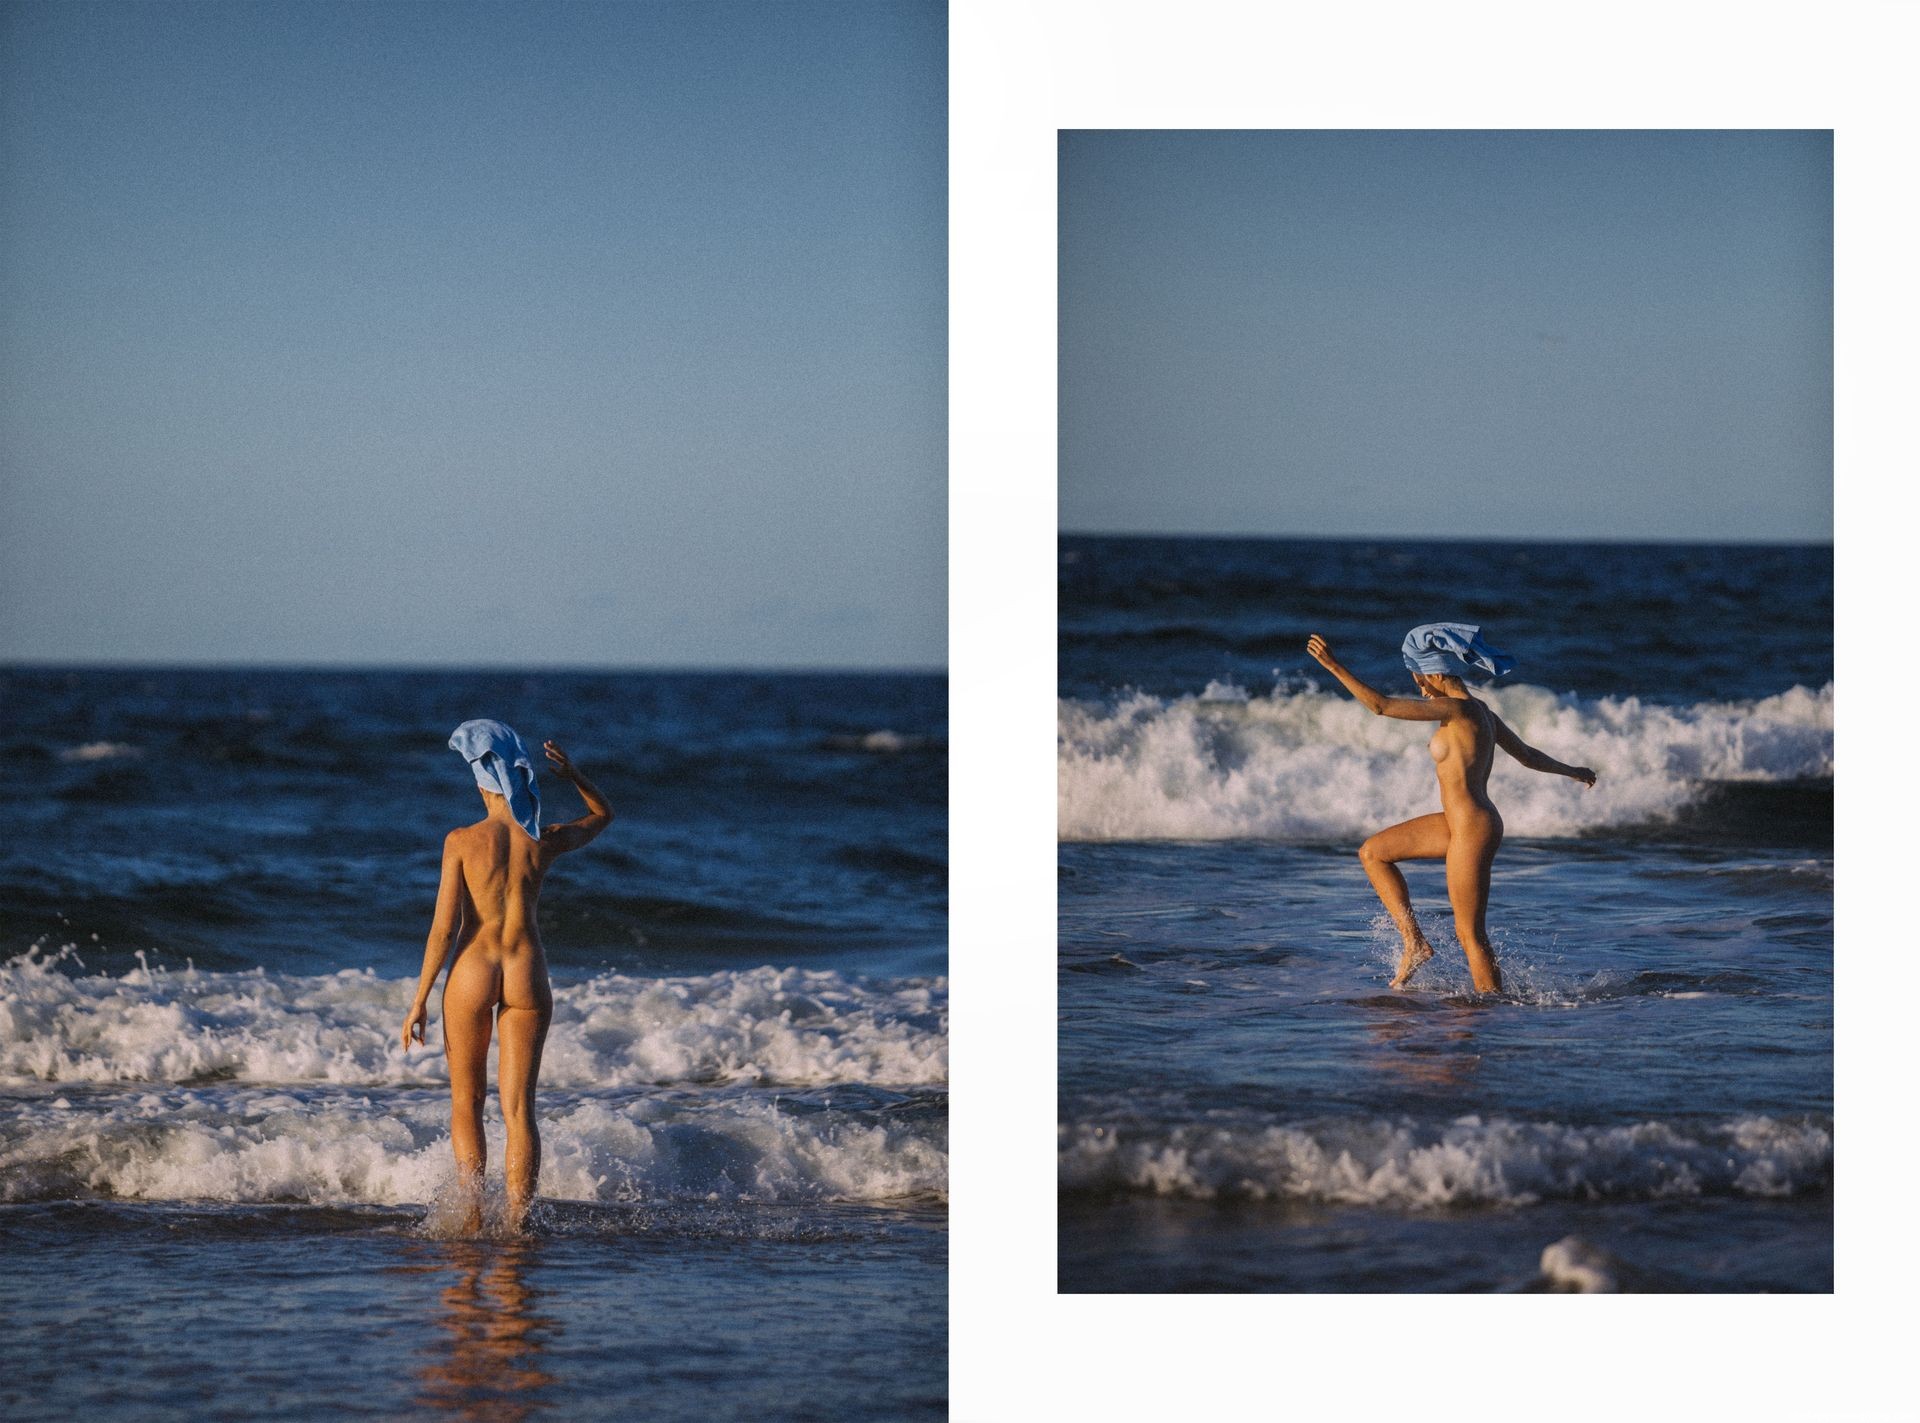 Natalie Roser Nude - Series Magazine (33 Photos)